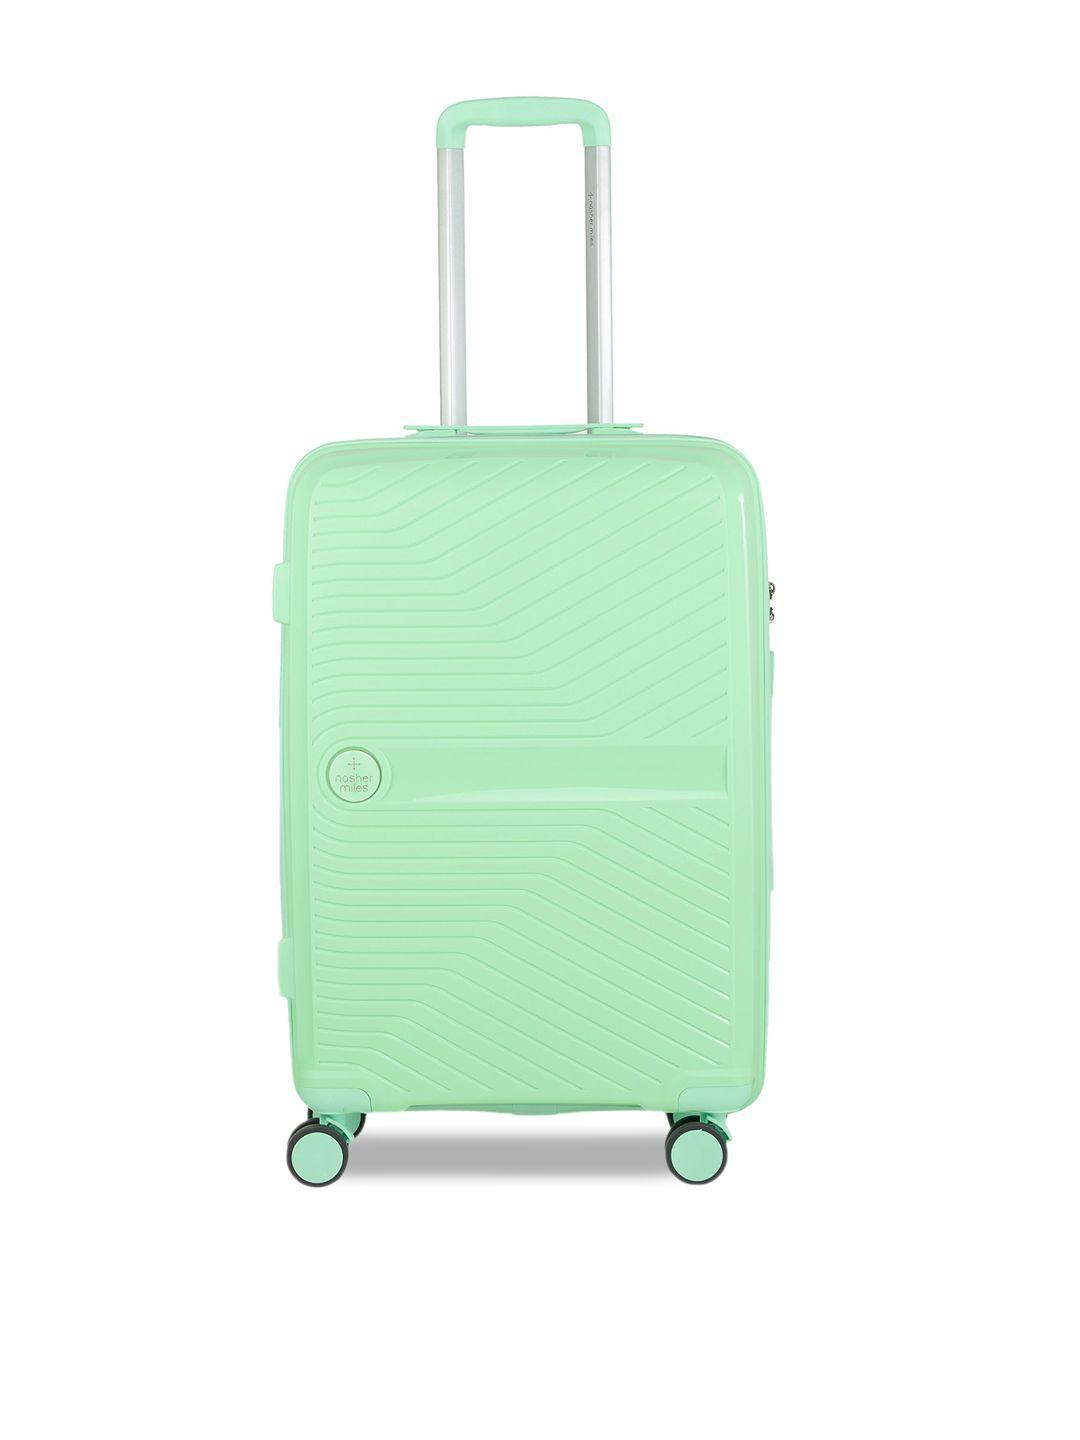 nasher-miles-bruges-hard-sided-medium-trolley-suitcase